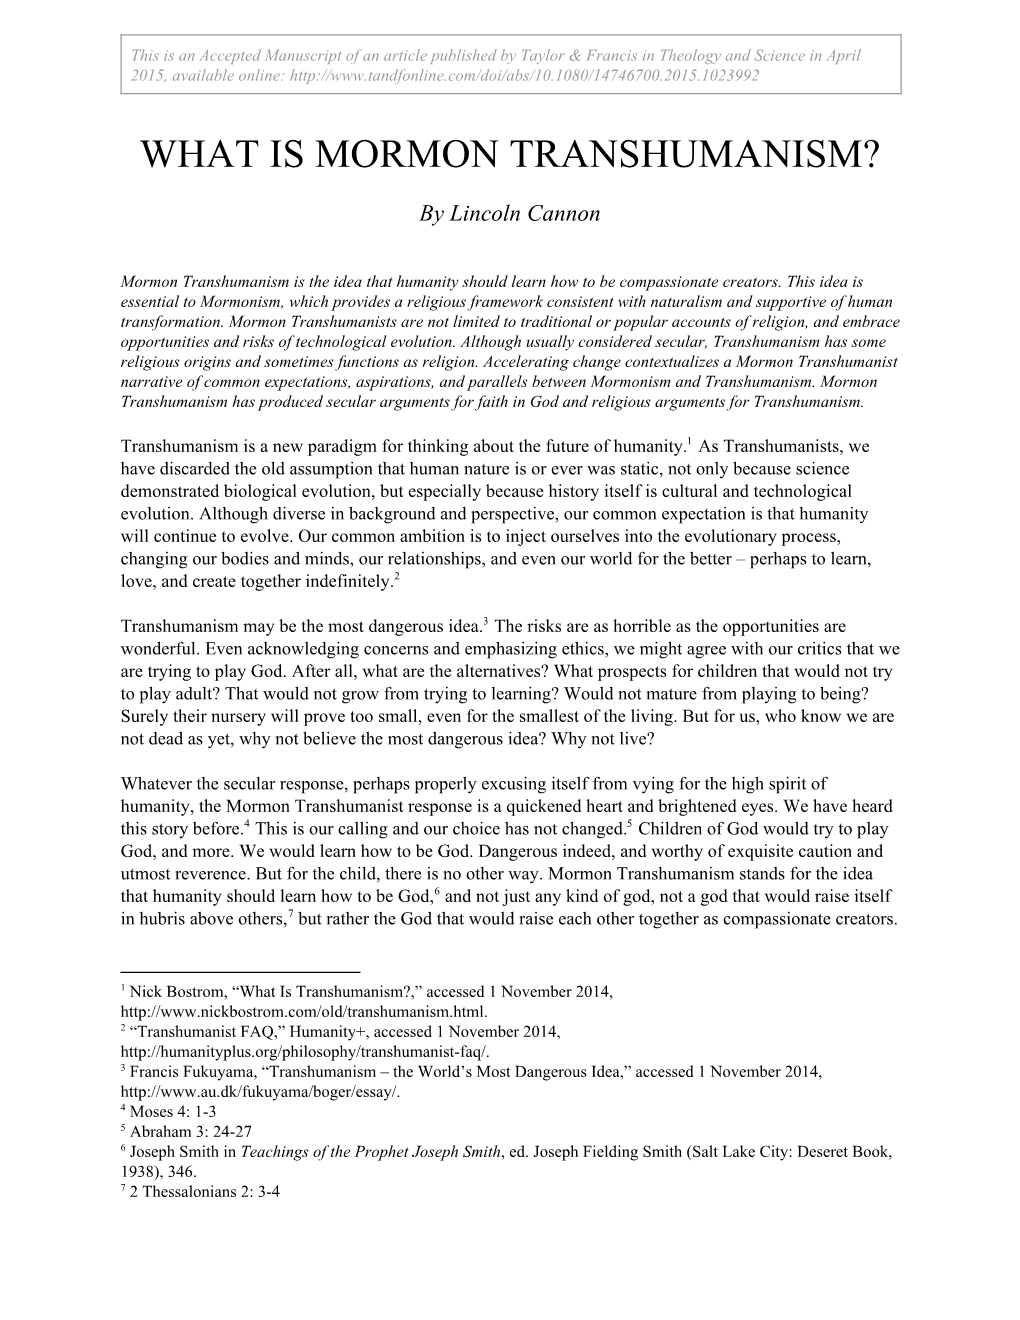 What Is Mormon Transhumanism?